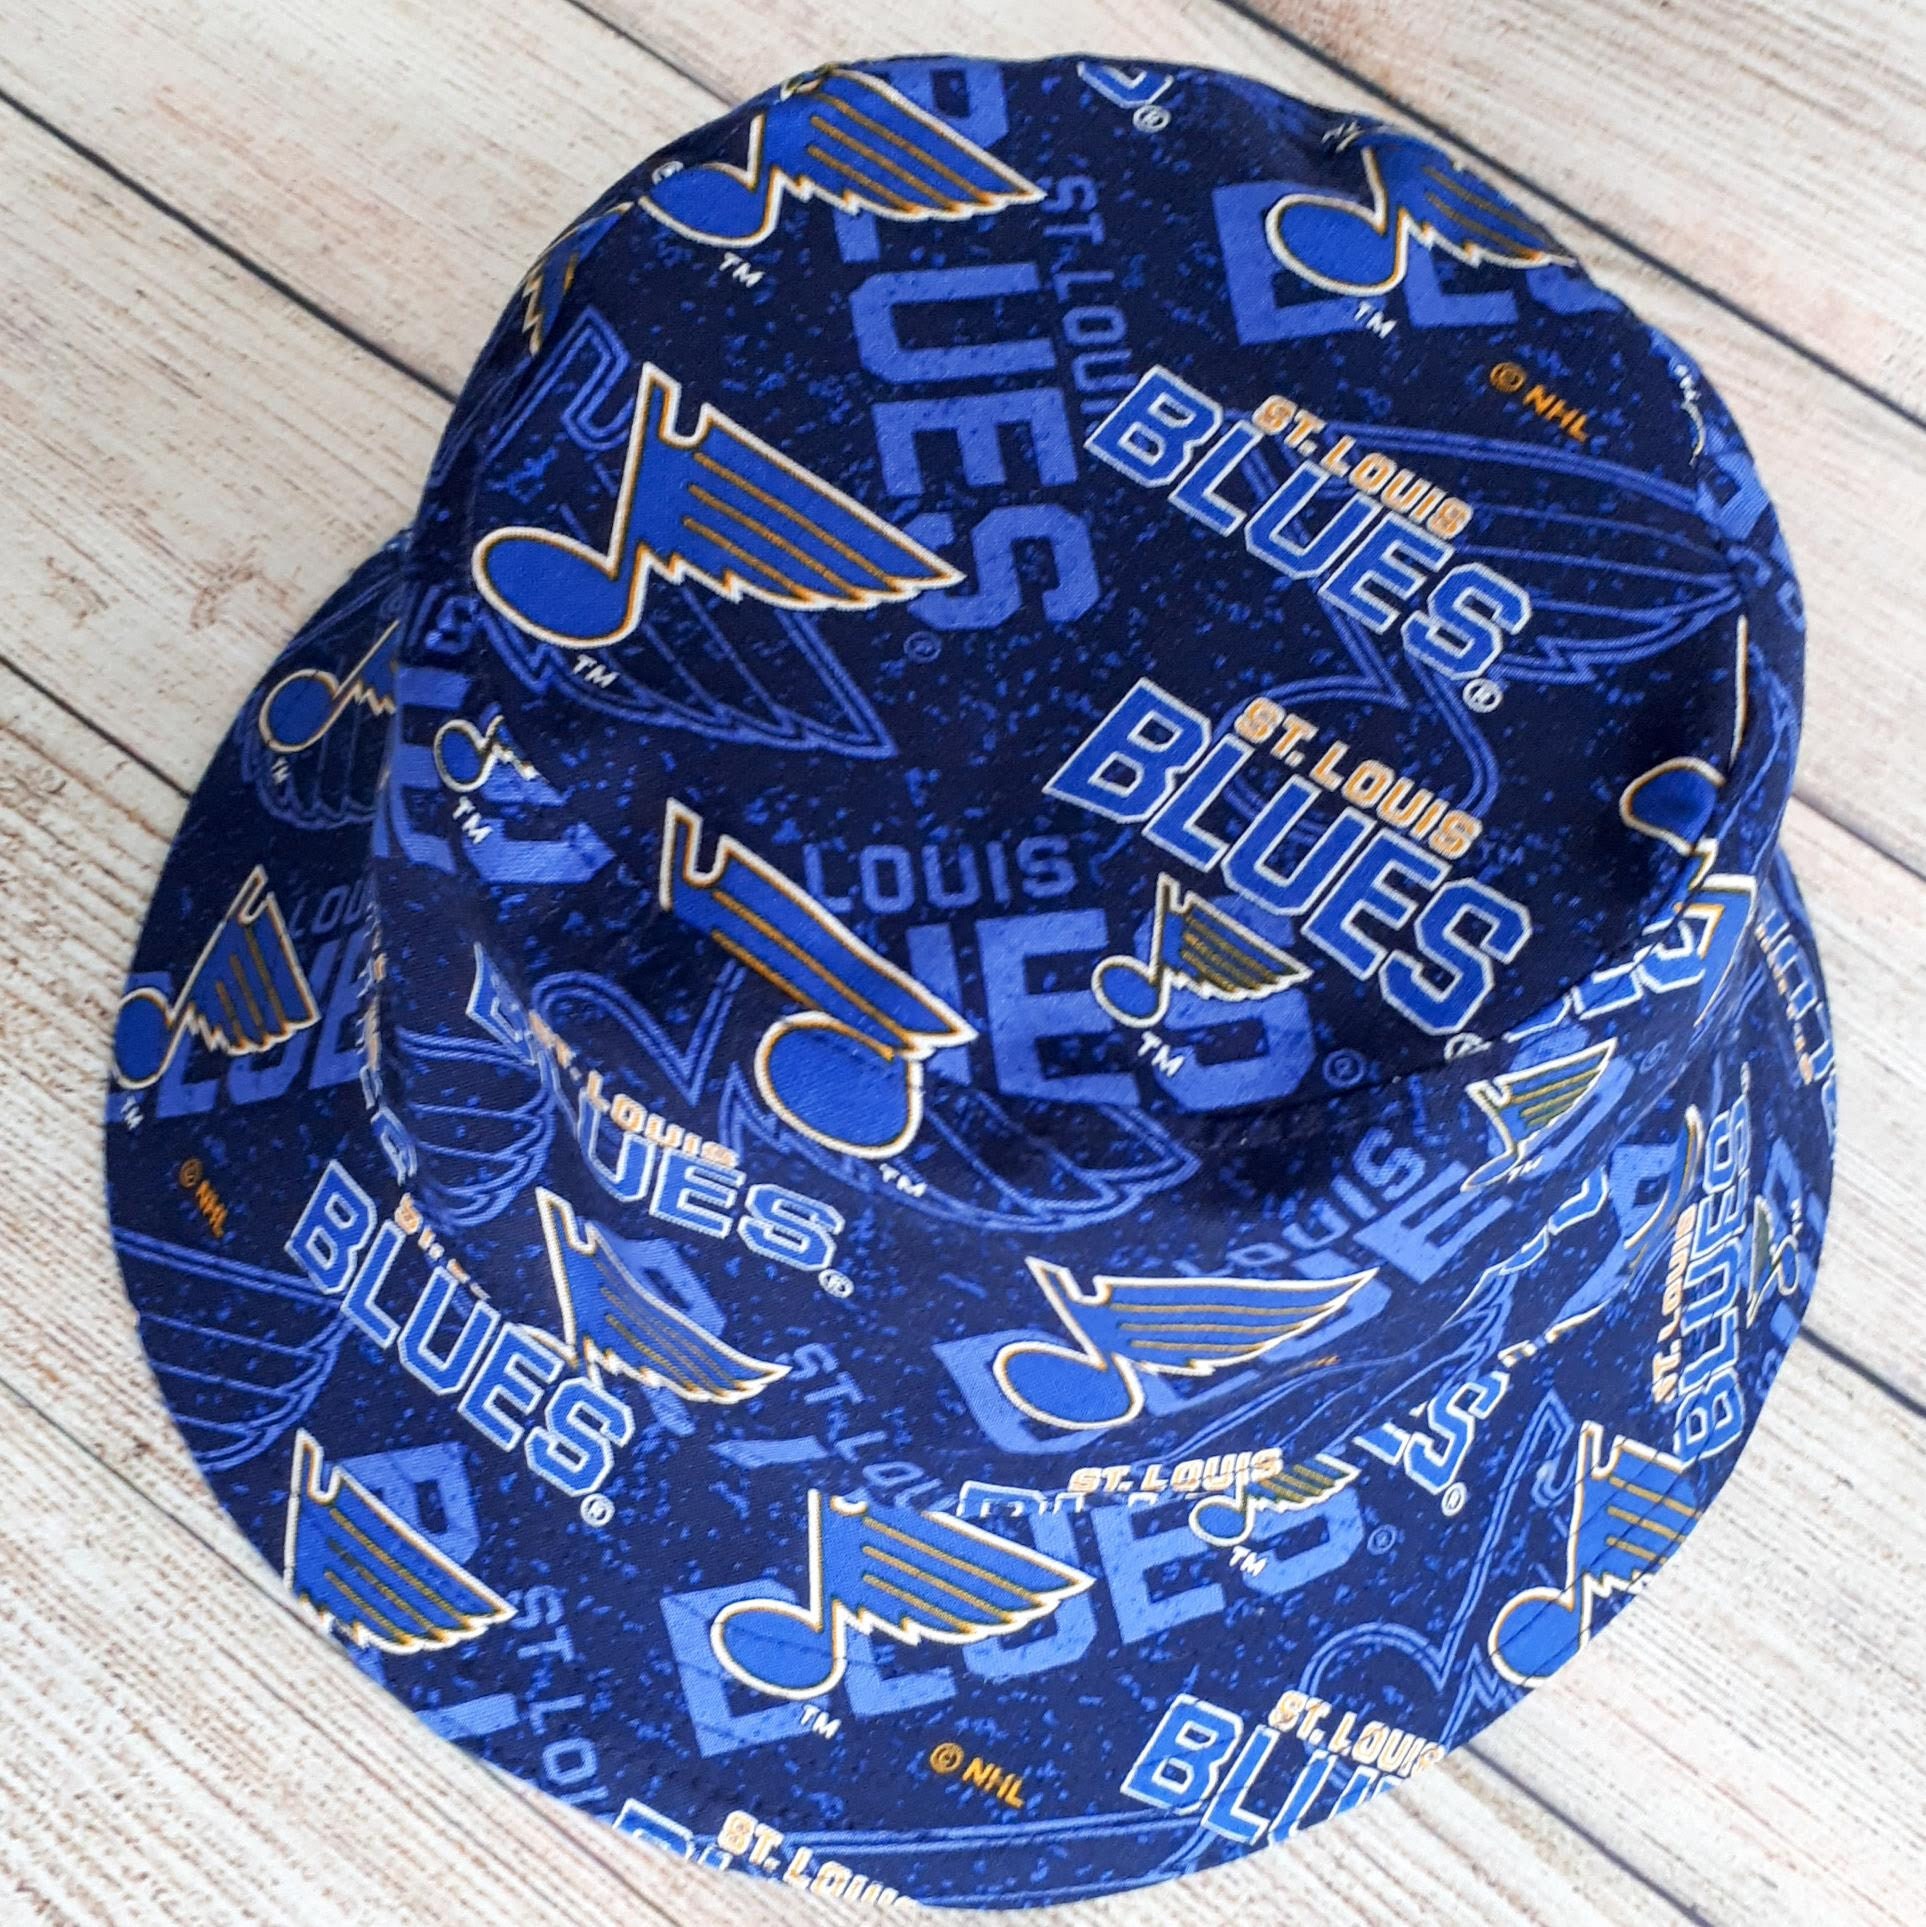 Adult Bucket Hat St. Louis Blues NHL Reversible Cotton -  Israel